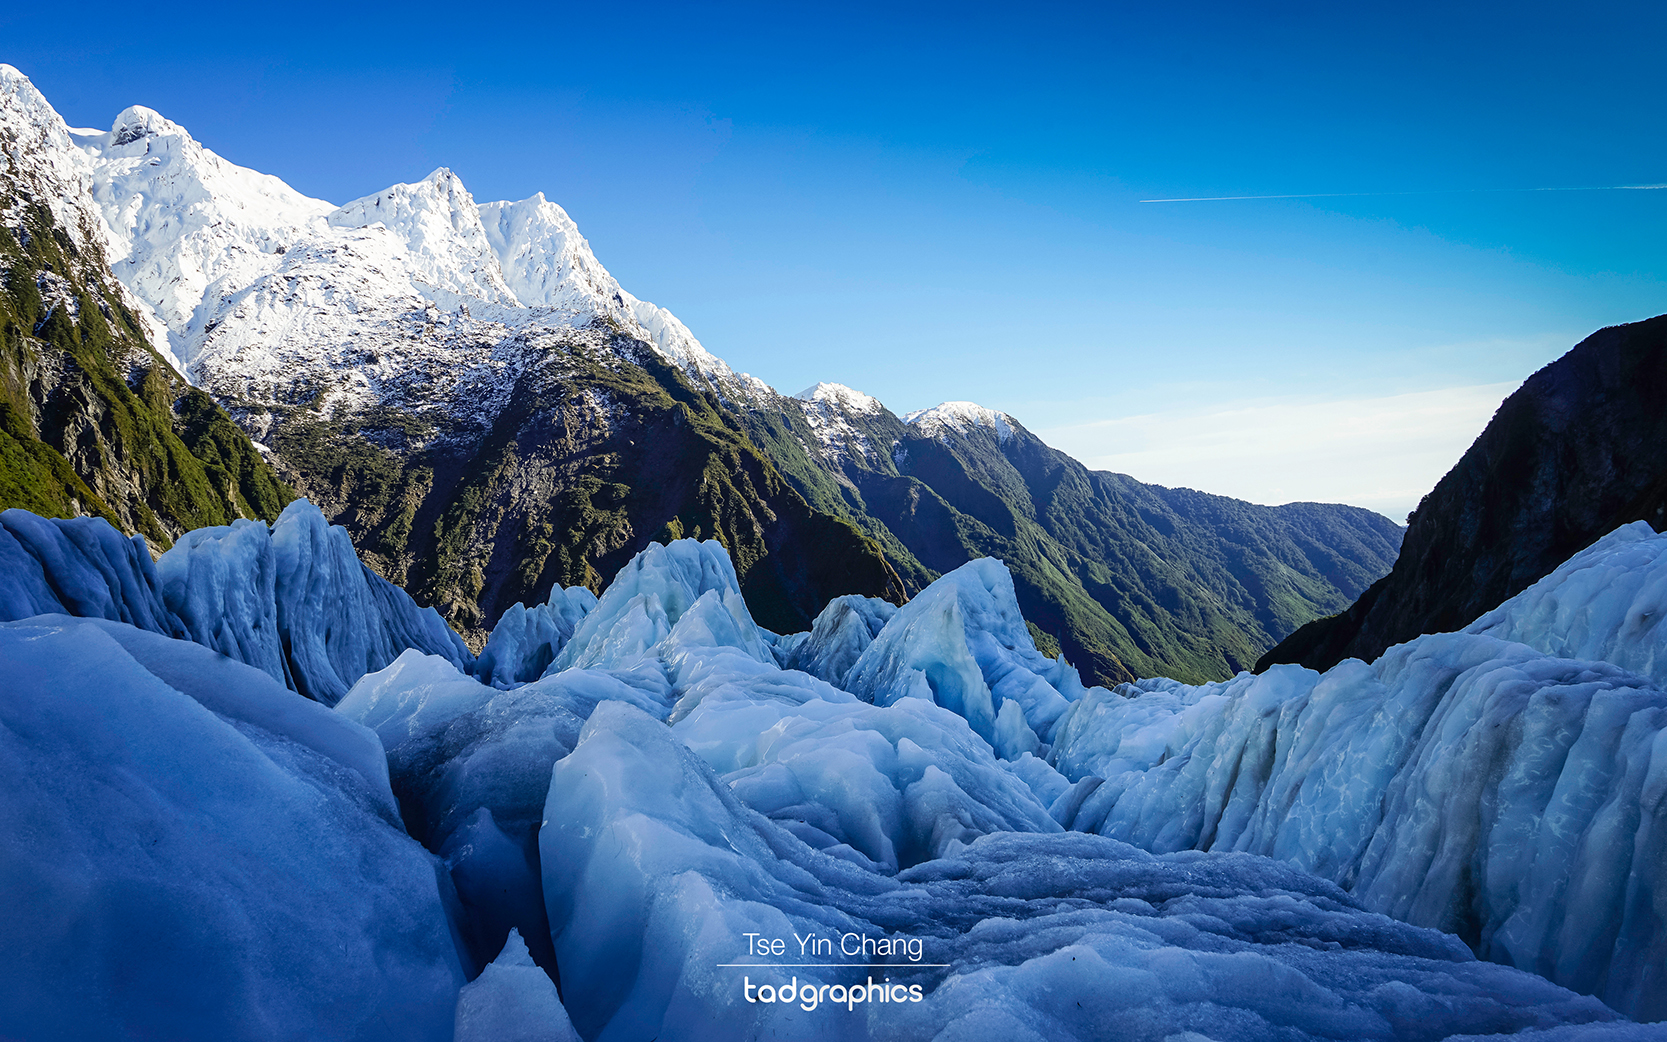 The majestic Franz Josef Glacier